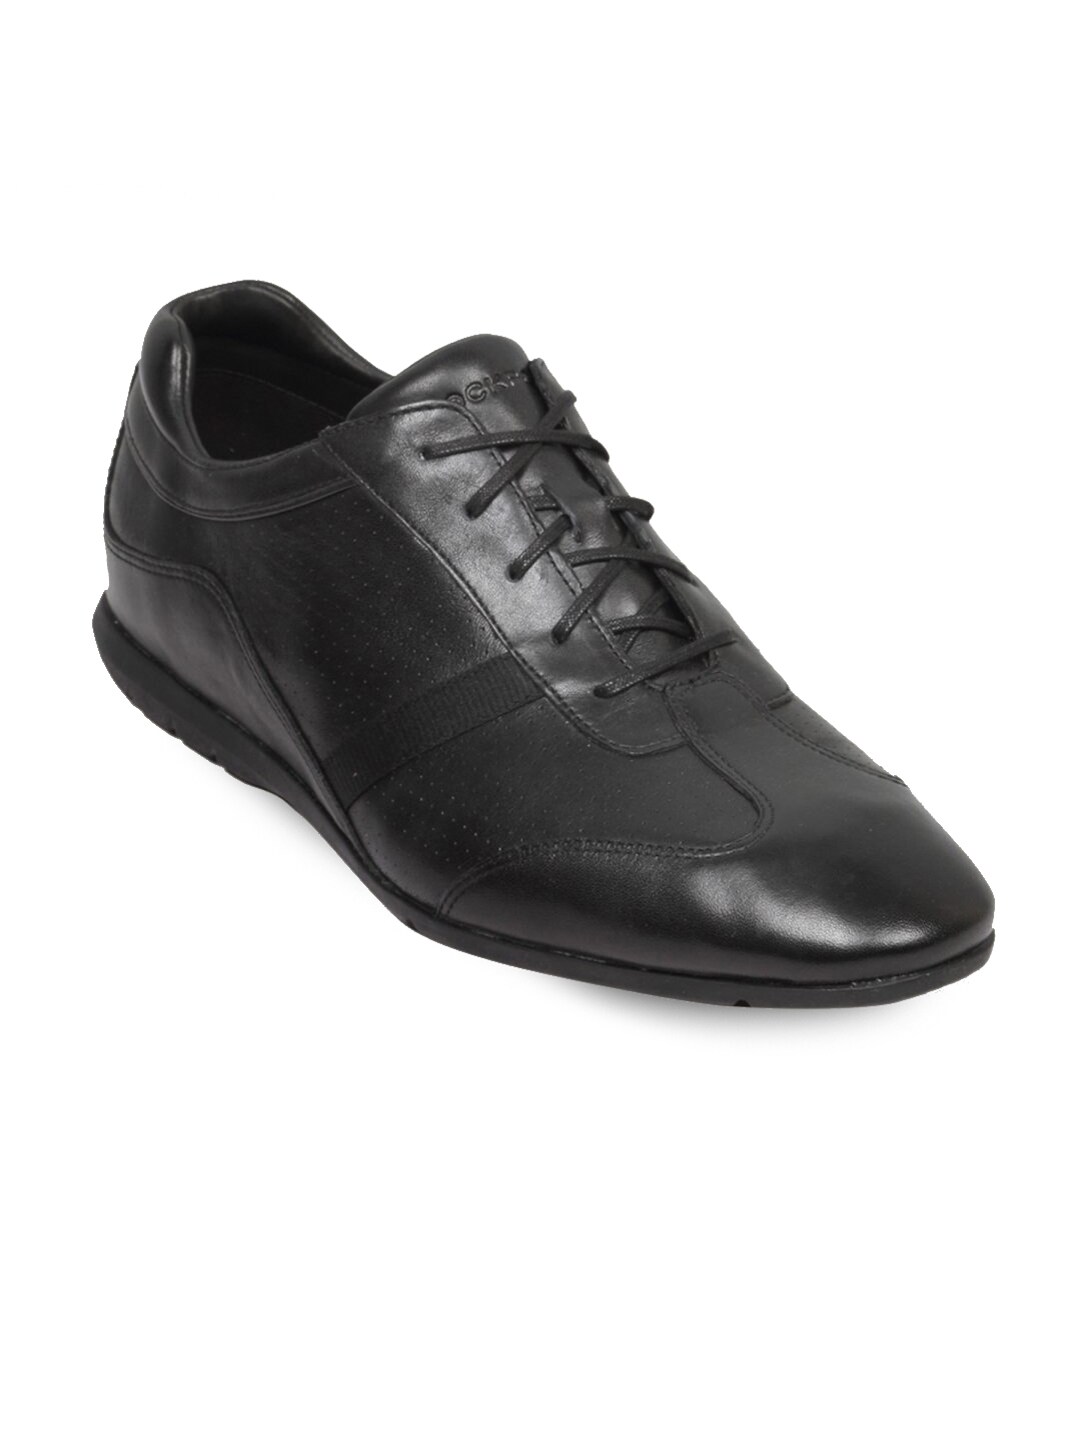 Rockport Men's Stanton Black Shoe